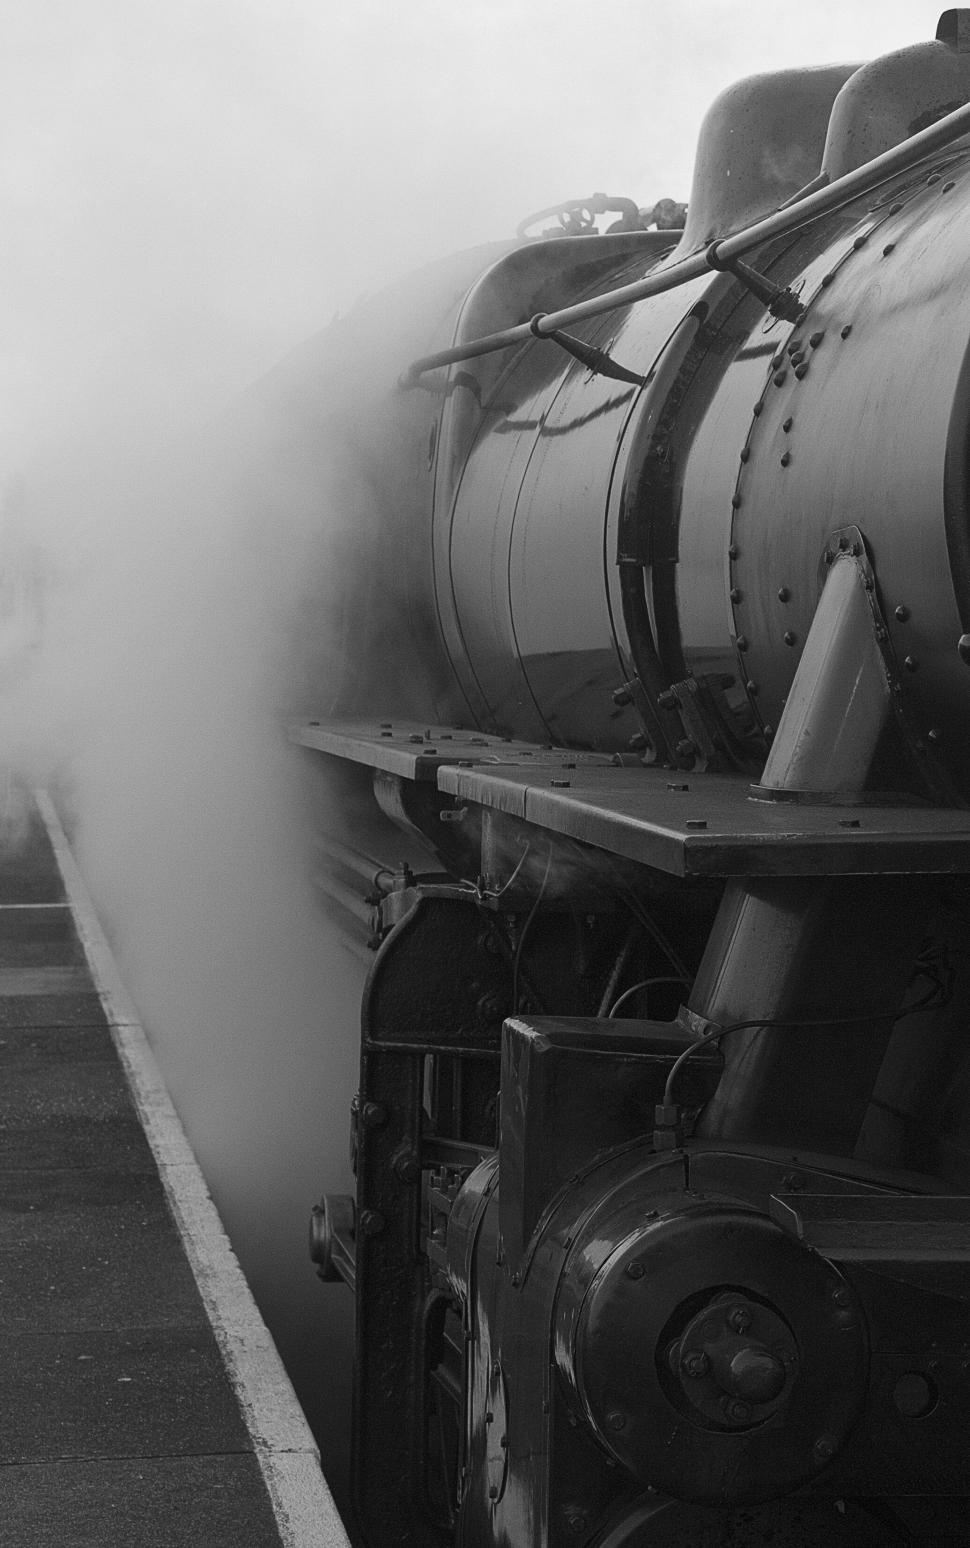 Free Image of Vintage steam locomotive exhaling steam on platform 